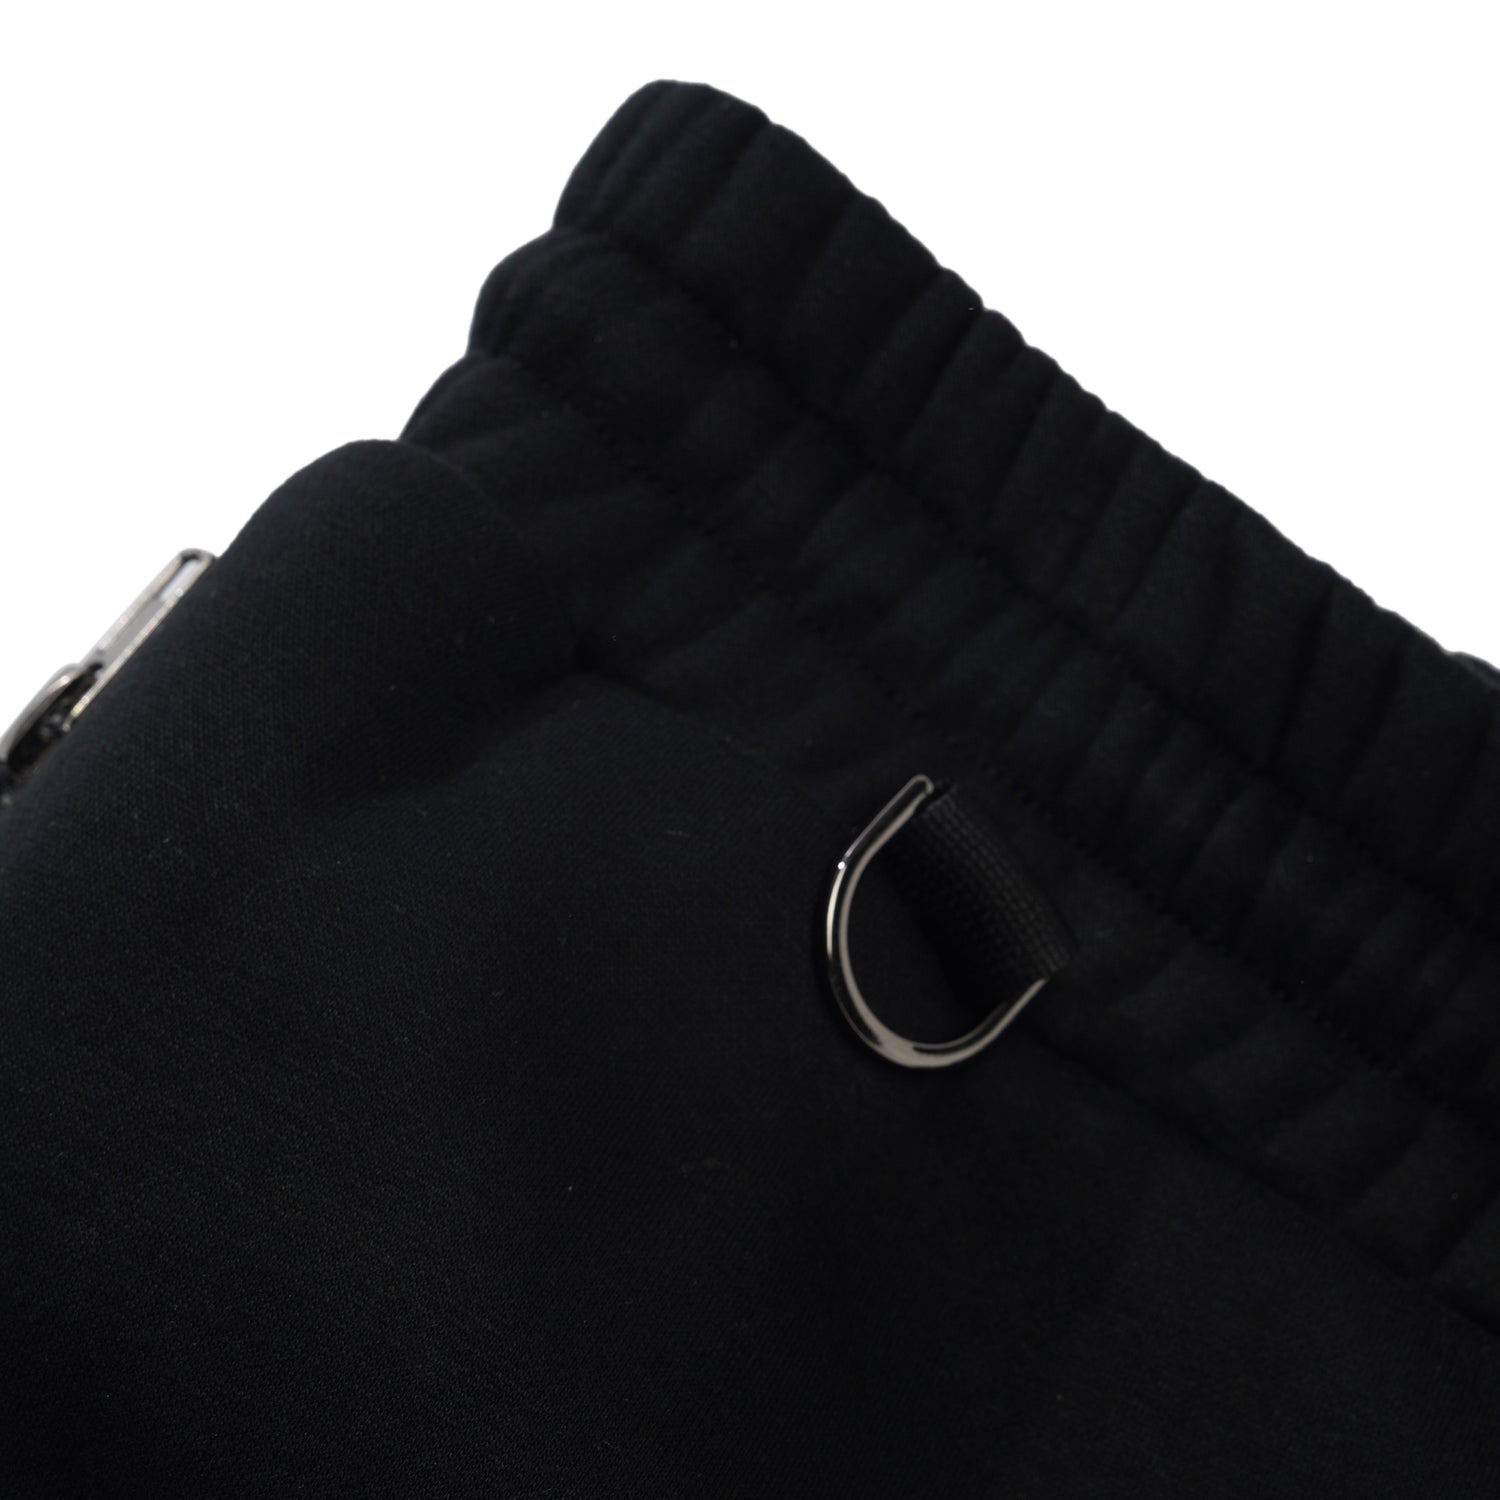 Contrast Fleece Track Shorts, Black